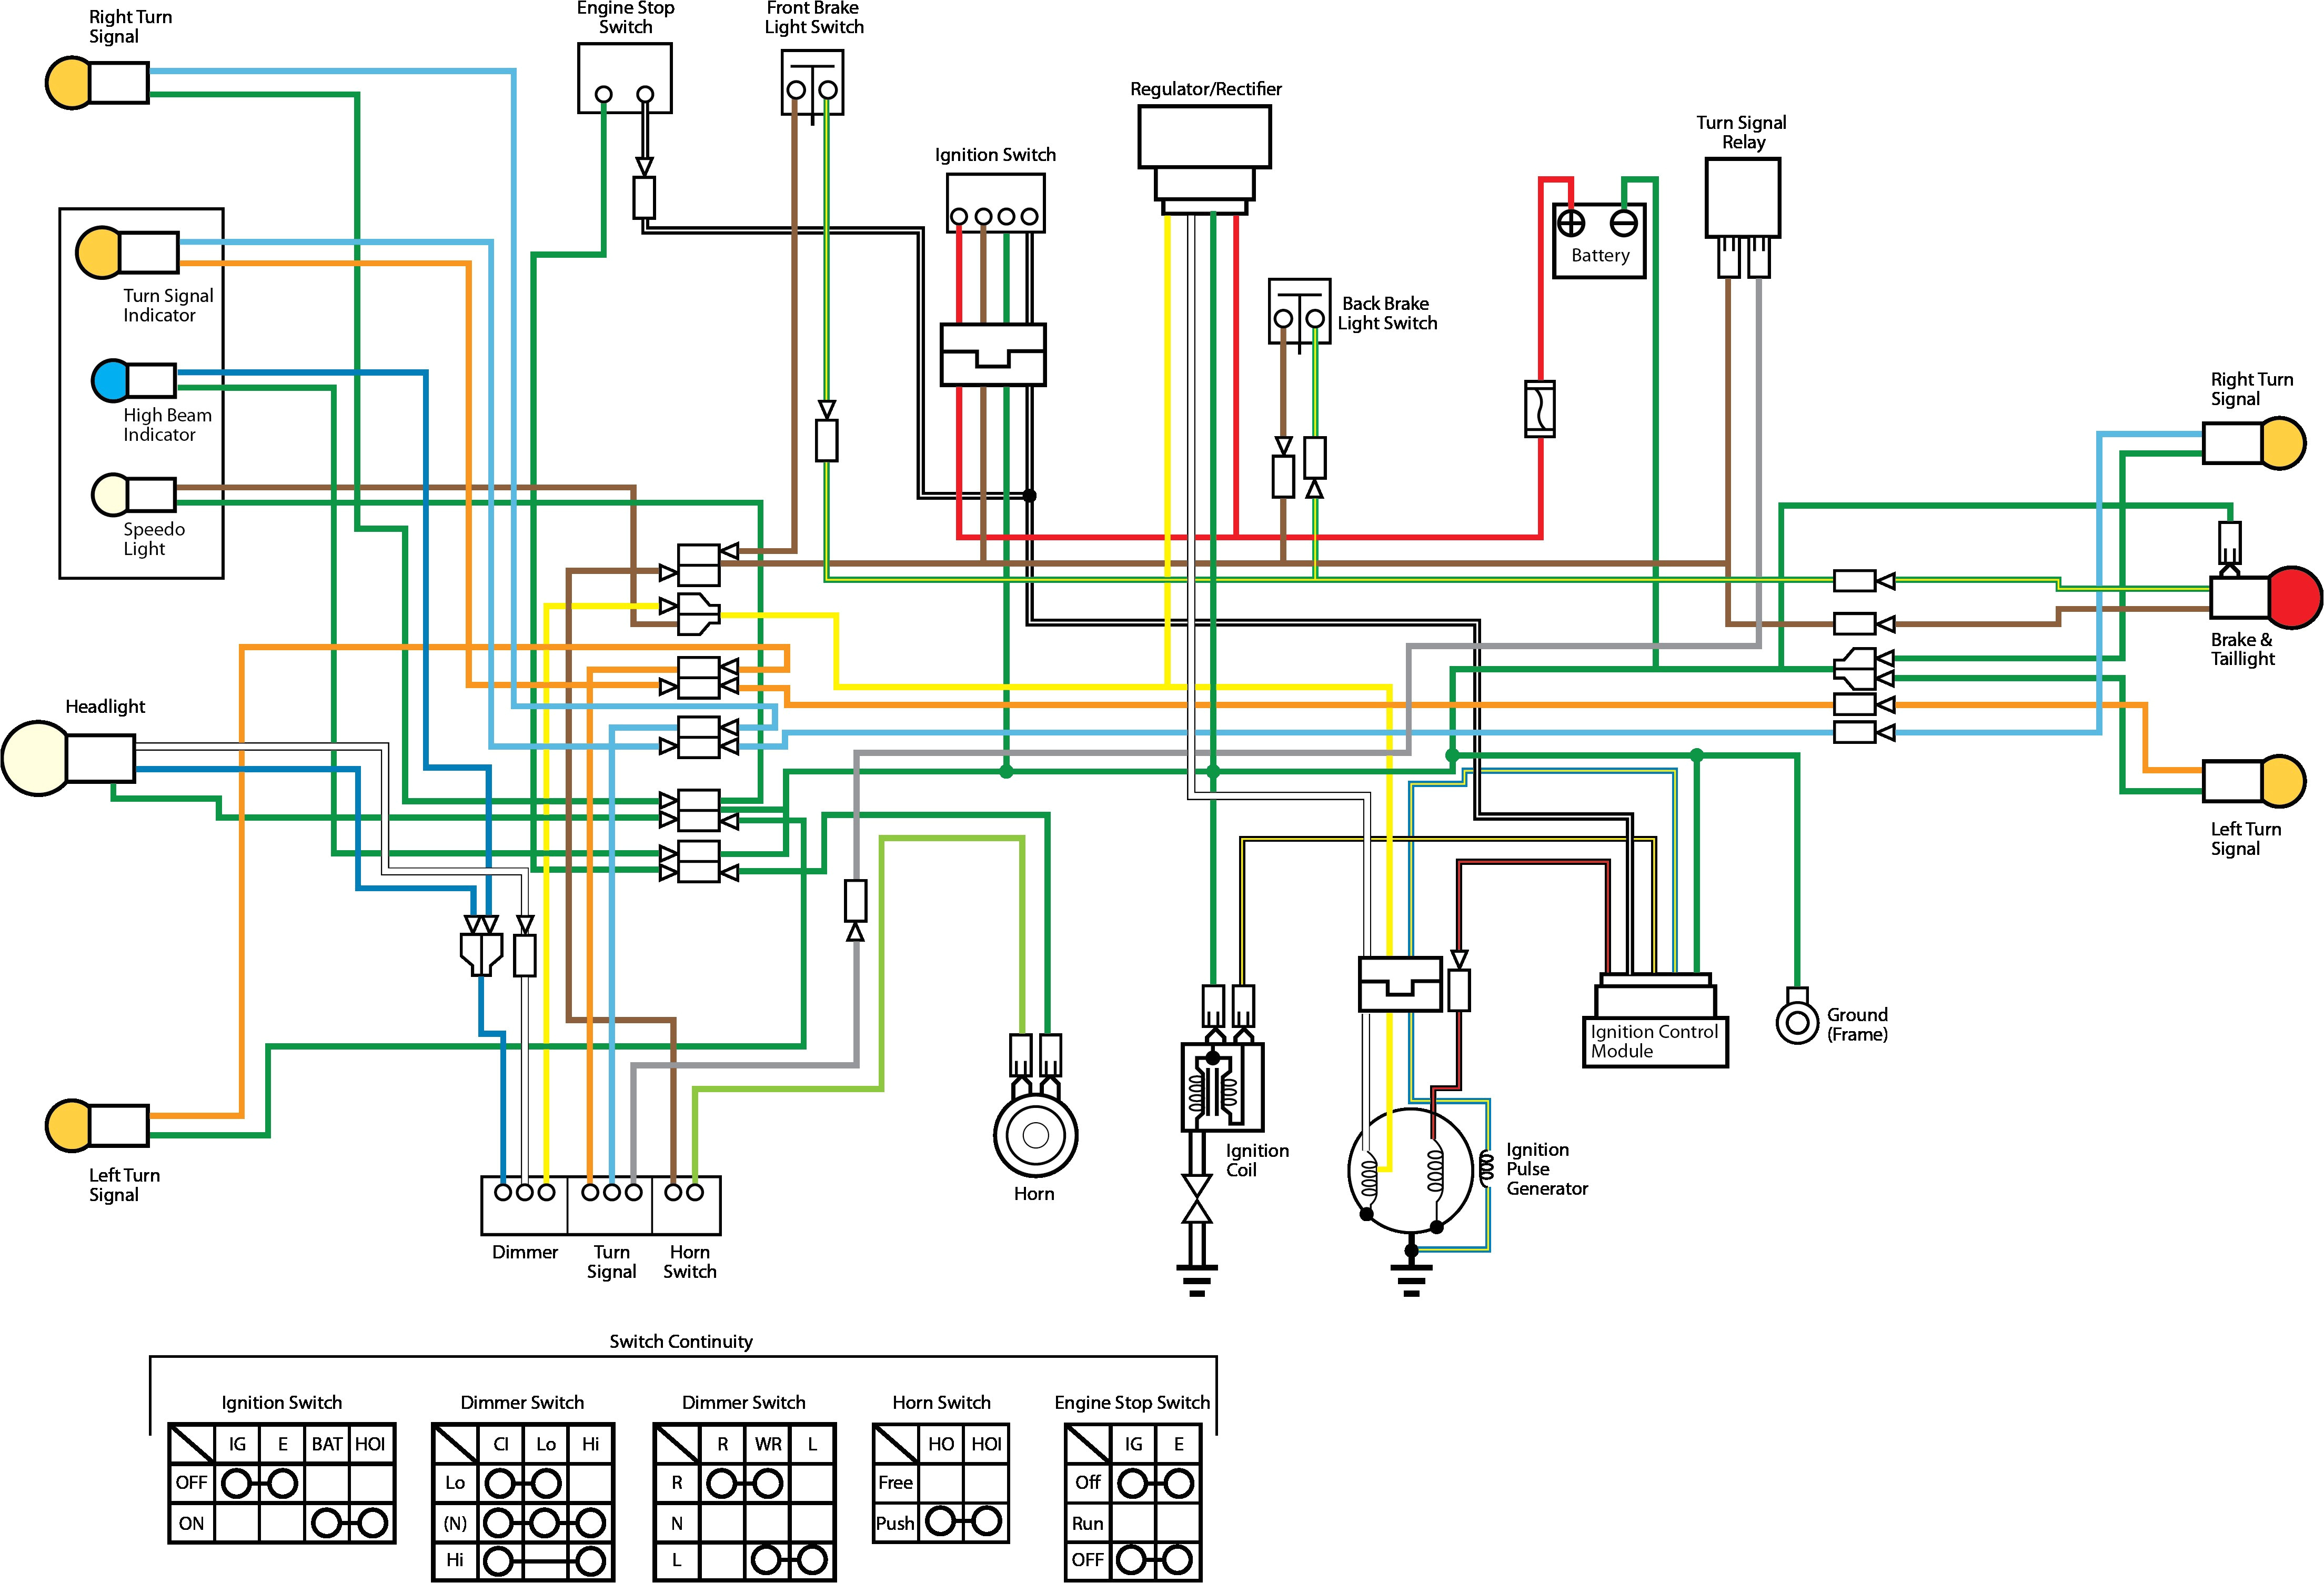 honda wave 100 electrical wiring diagram pdf unique wiring diagram moreover honda 125 wiring diagram as well as honda of honda wave 100 electrical wiring diagram pdf jpg